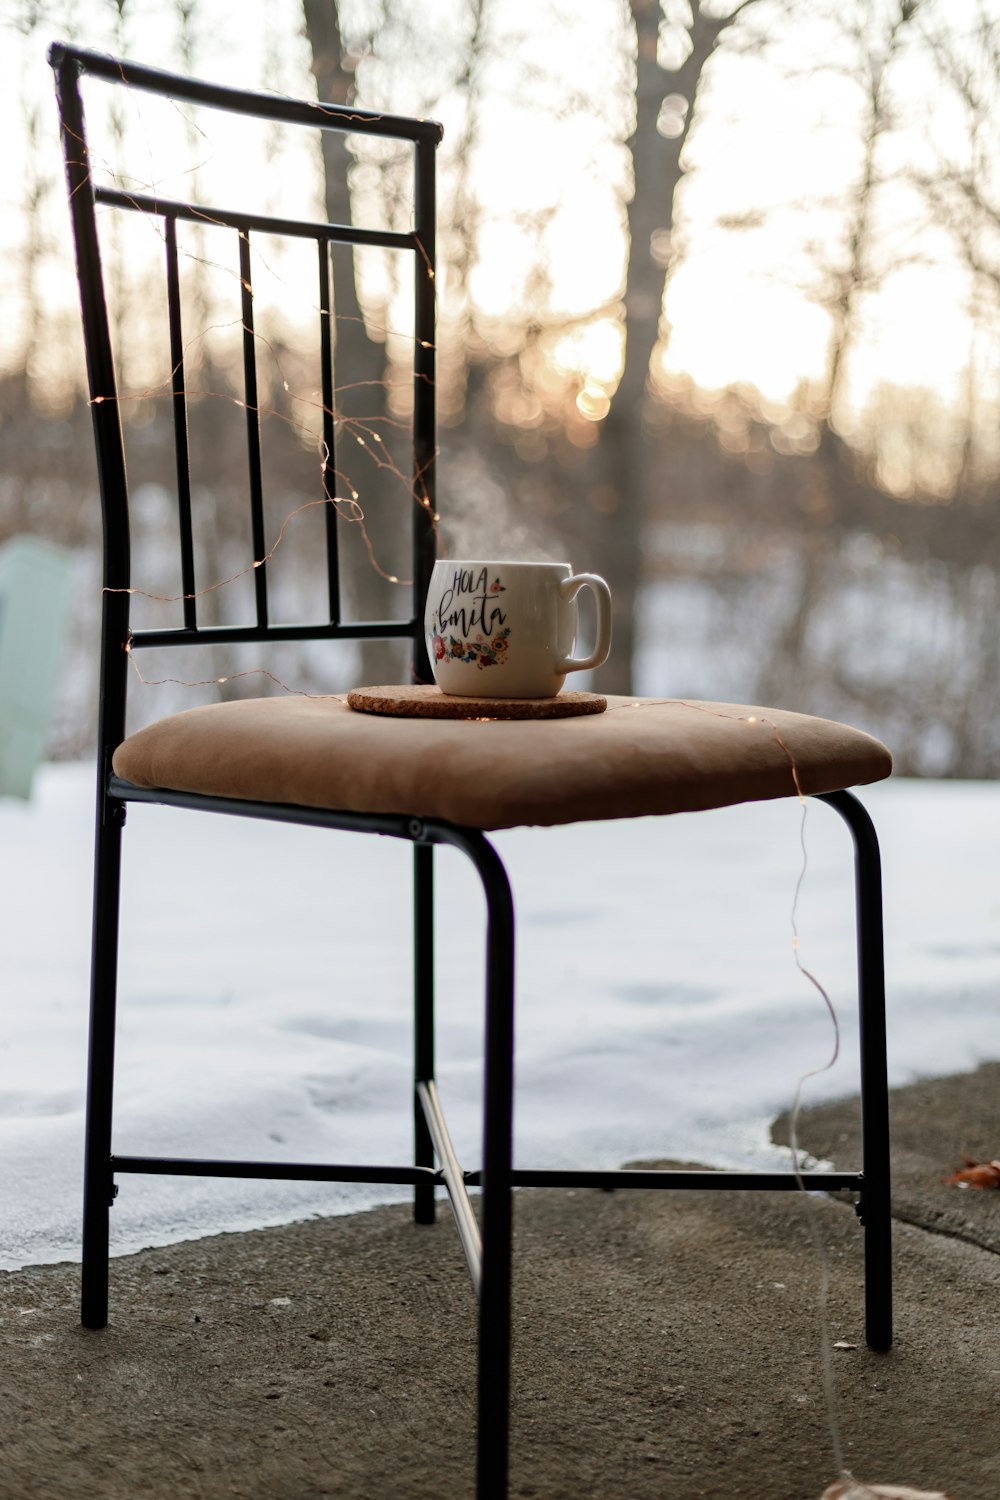 white ceramic mug on brown wooden chair